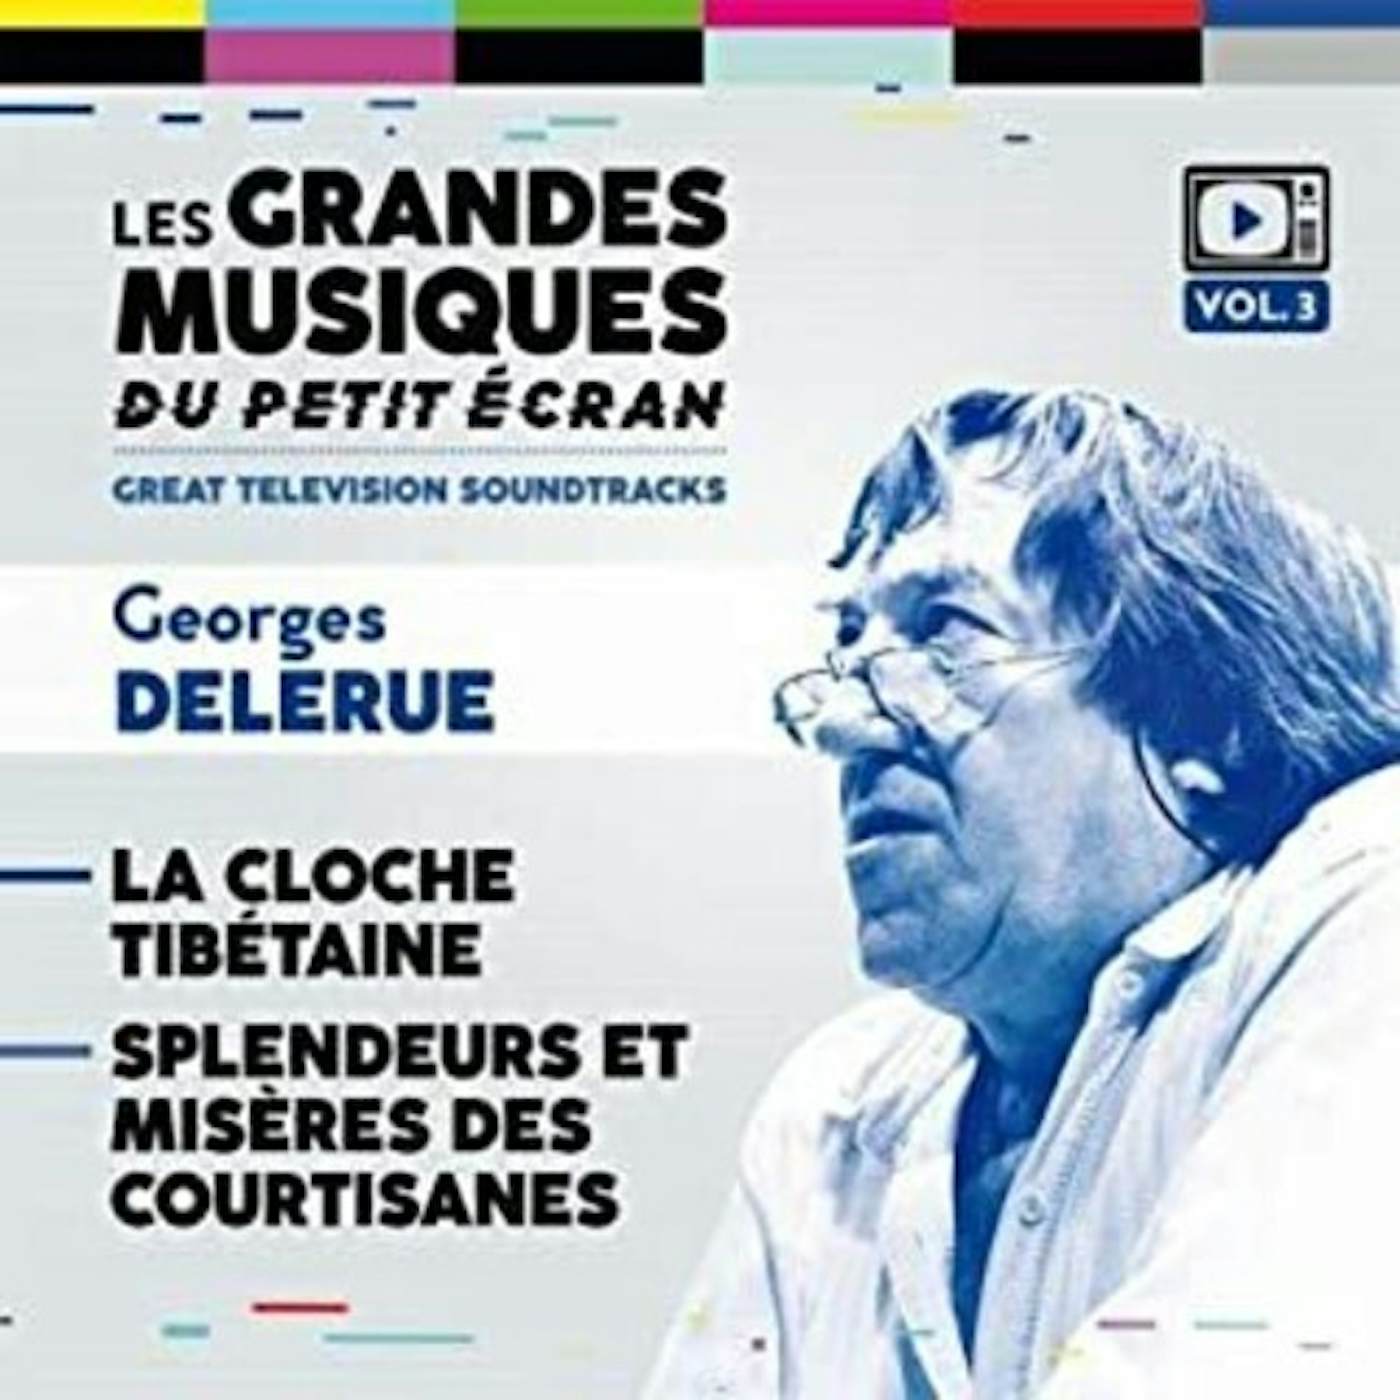 Georges Delerue LA CLOCHE TIBETAINE / SPLENDEURS ET MISERES / Original Soundtrack CD